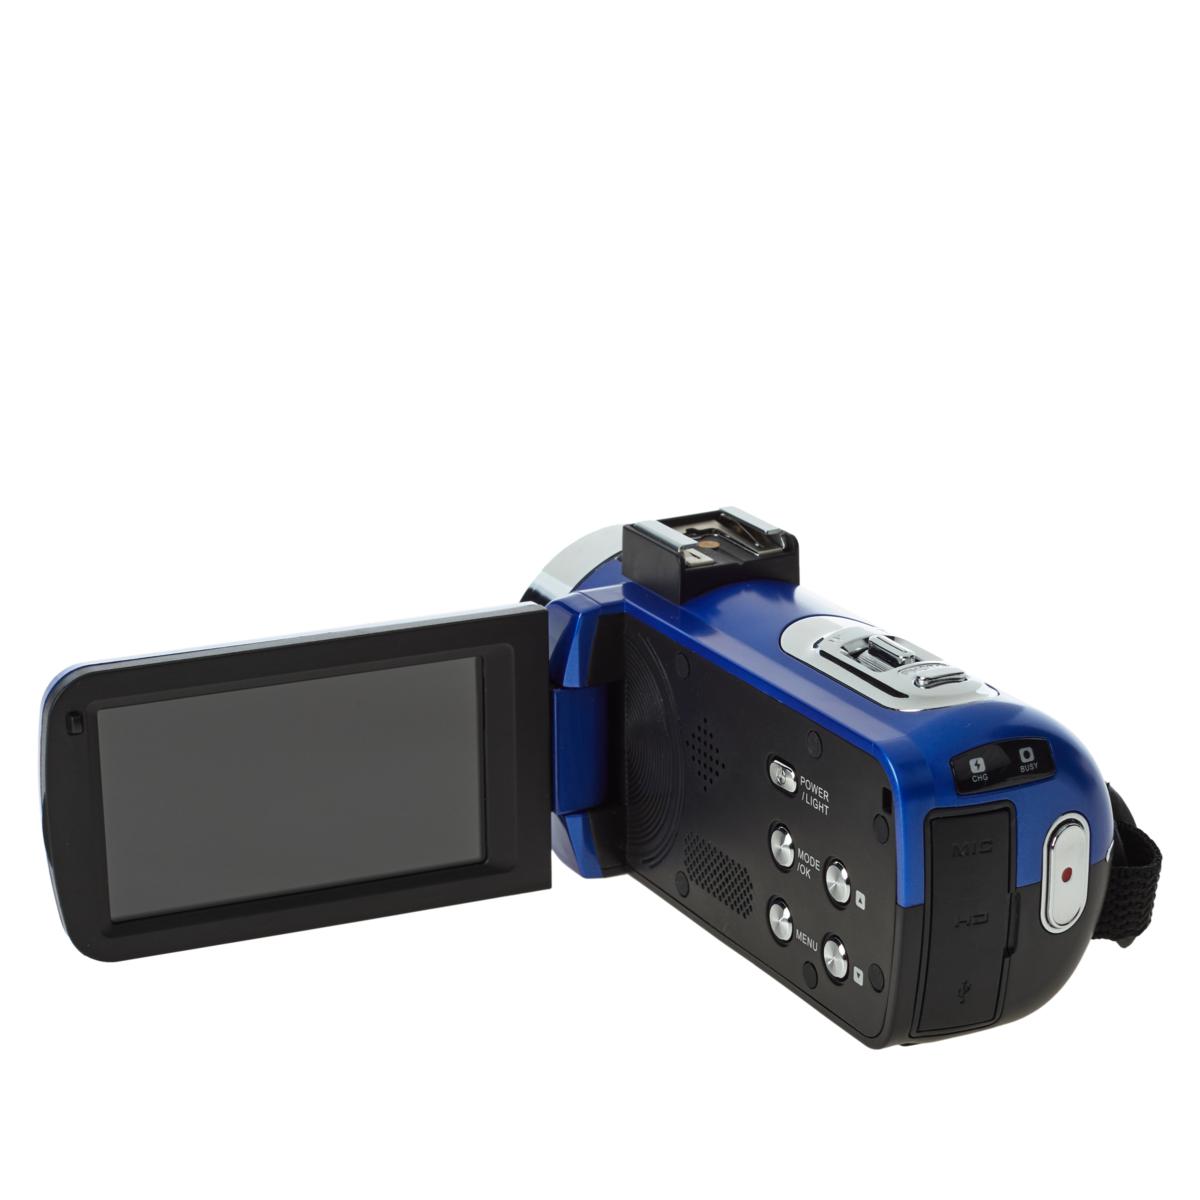 4k-digital-camcorder-id995hd-v1-blue-2